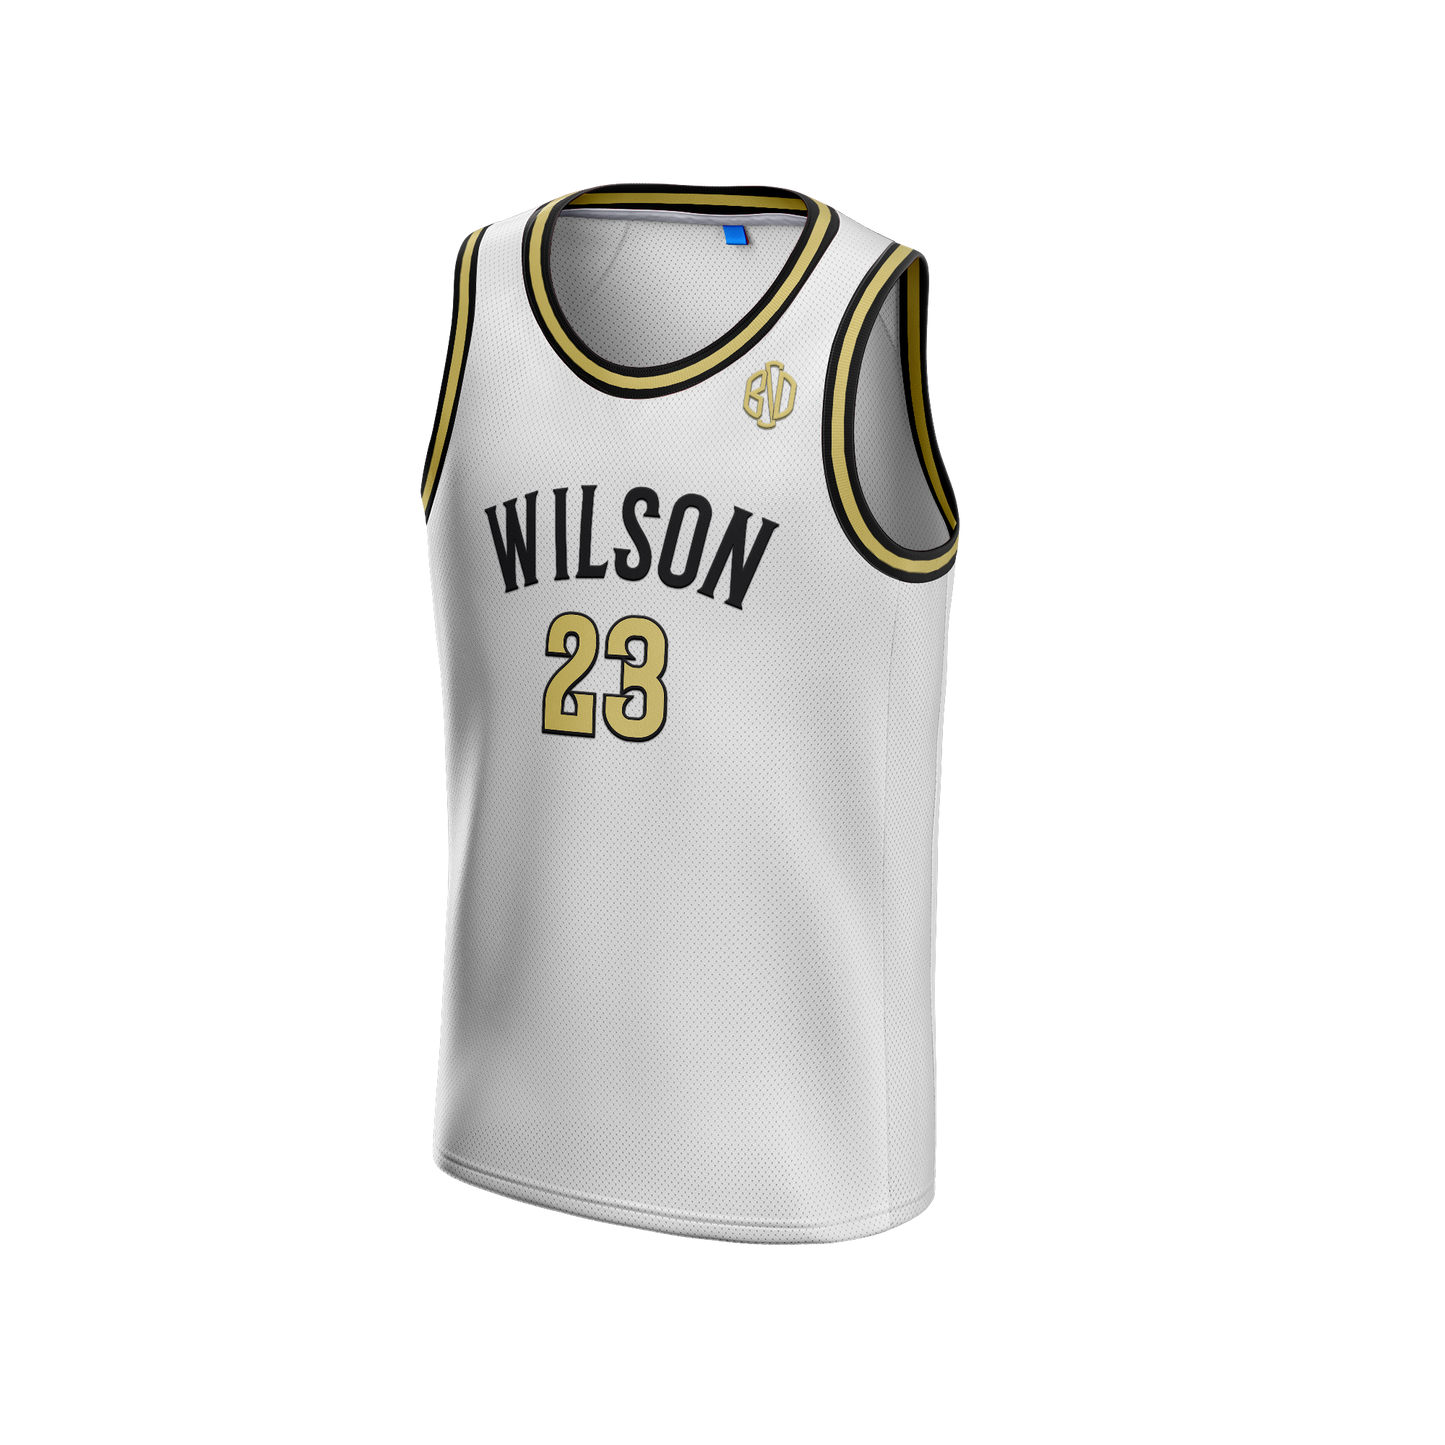 Wilson Middle School Team Store